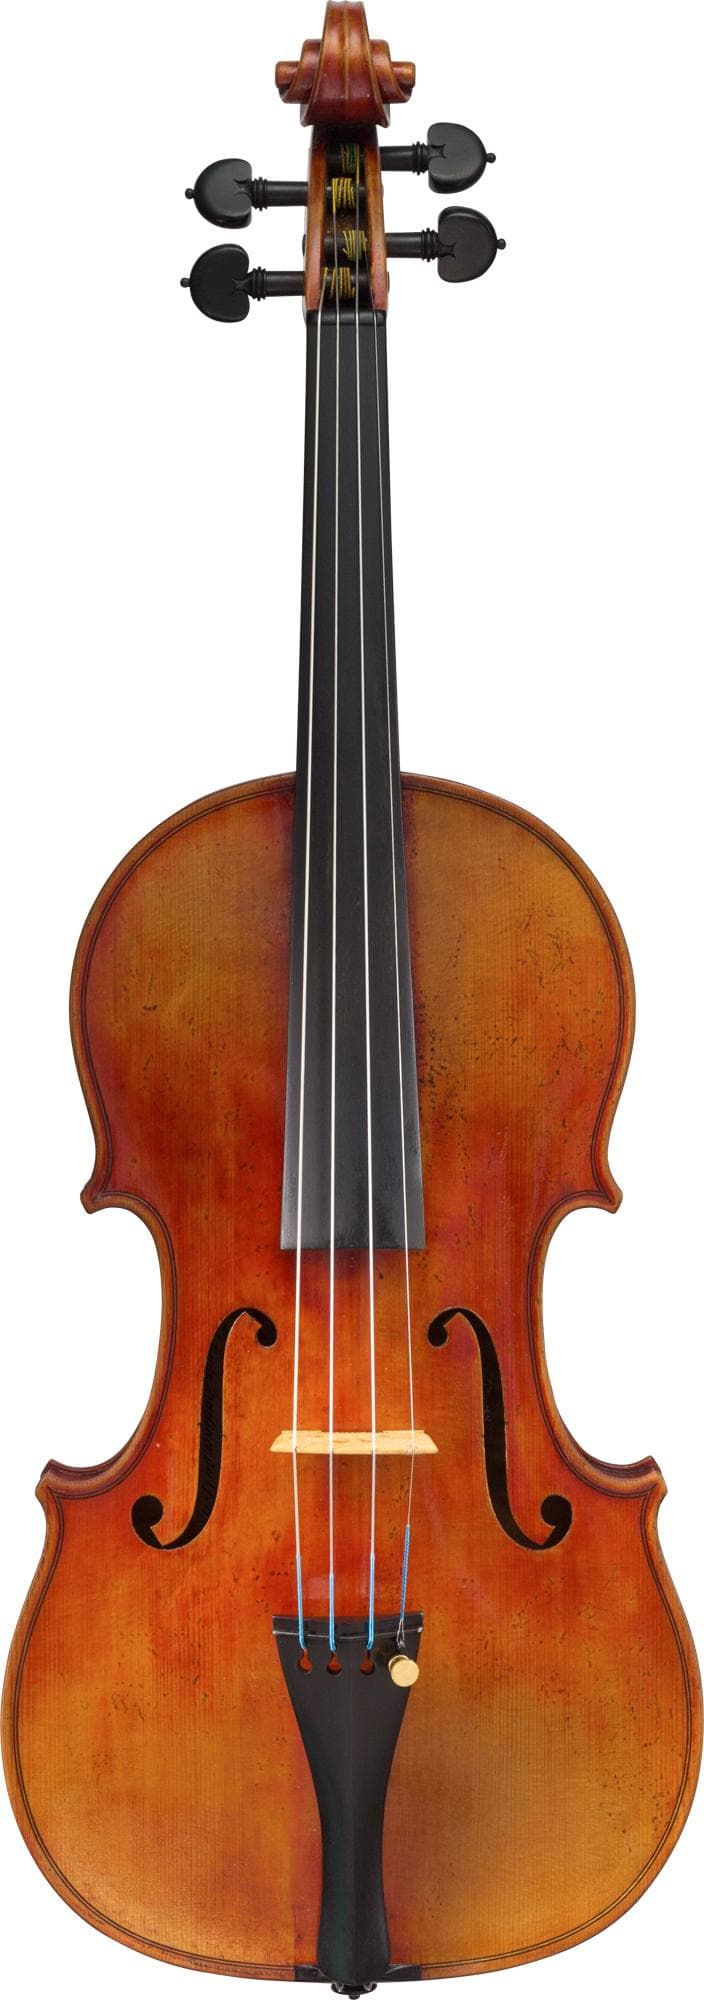 Heinrich Th. Heberlein, Jr. Violin, Germany, 1929